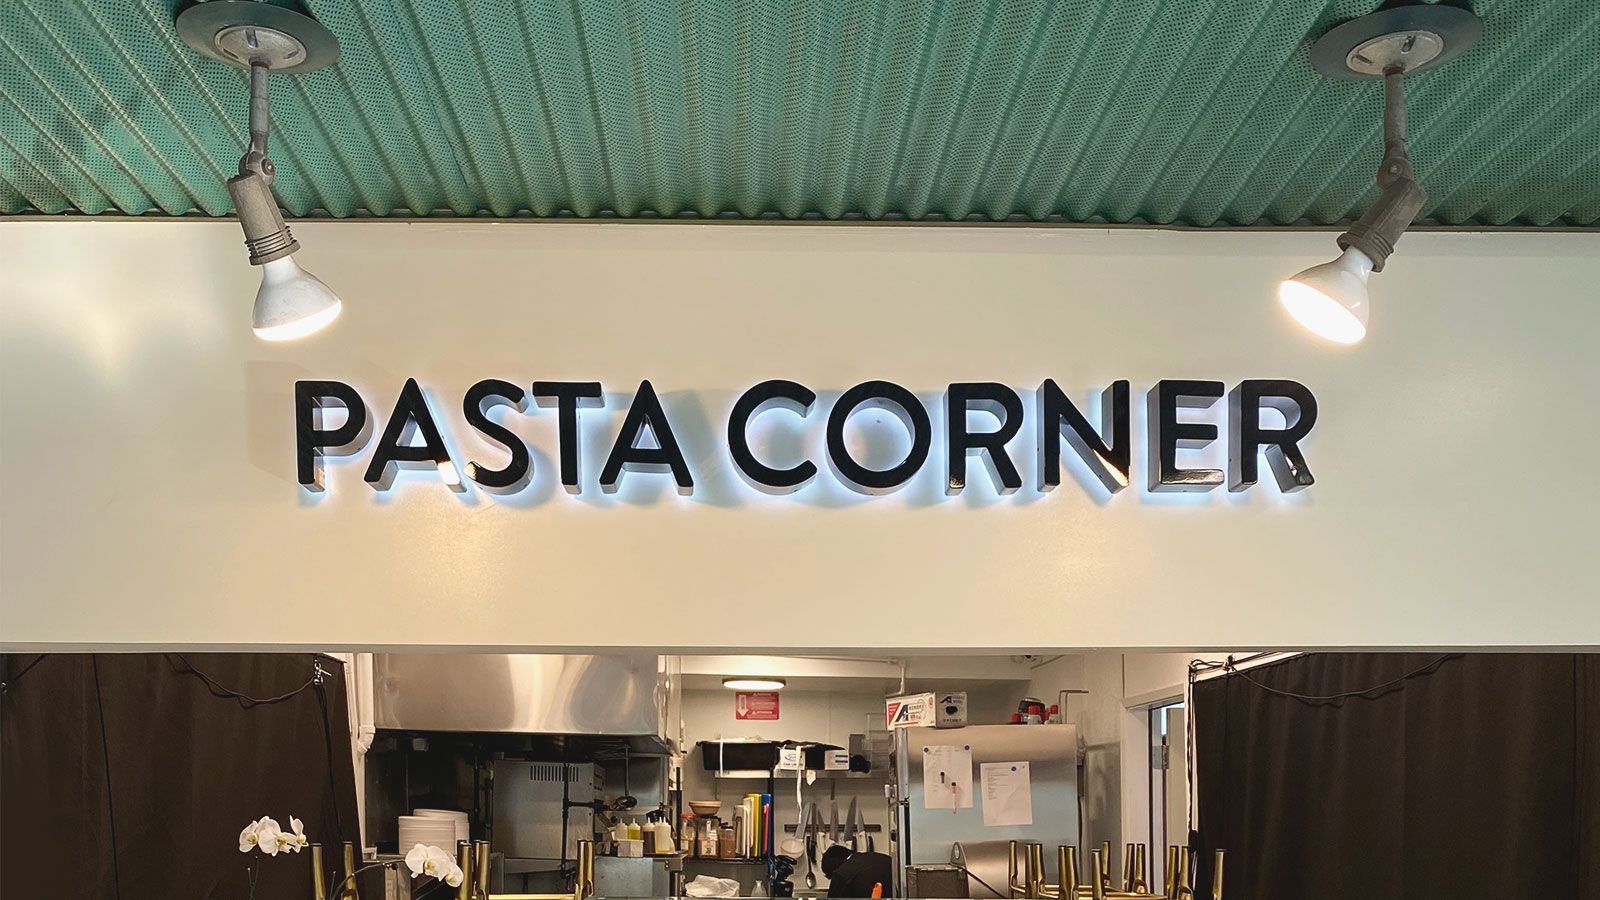 pasta corner reverse channel letters